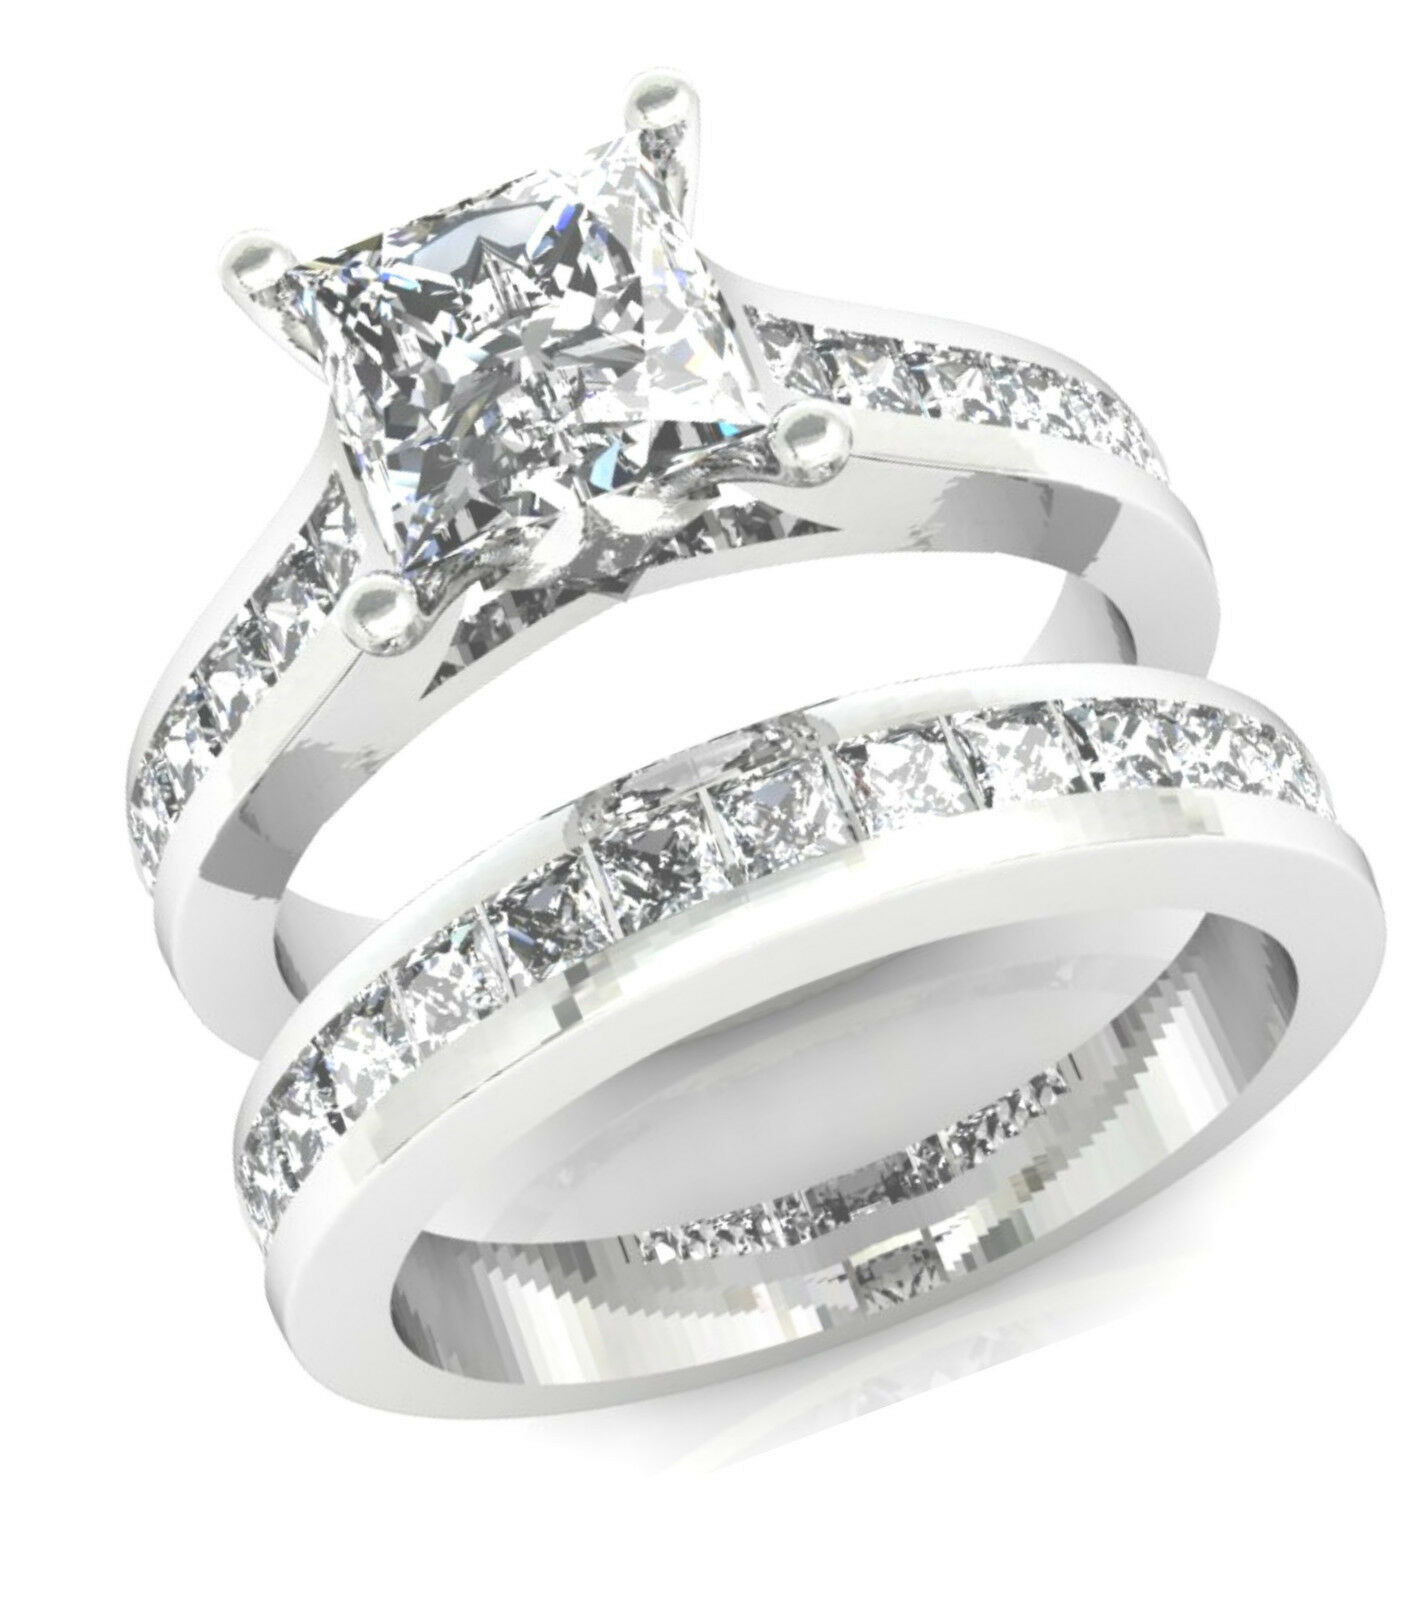 Bridal Sets Princess Cut
 3 2CT PRINCESS CUT CHANNEL SET ENGAGEMENT RING WEDDING